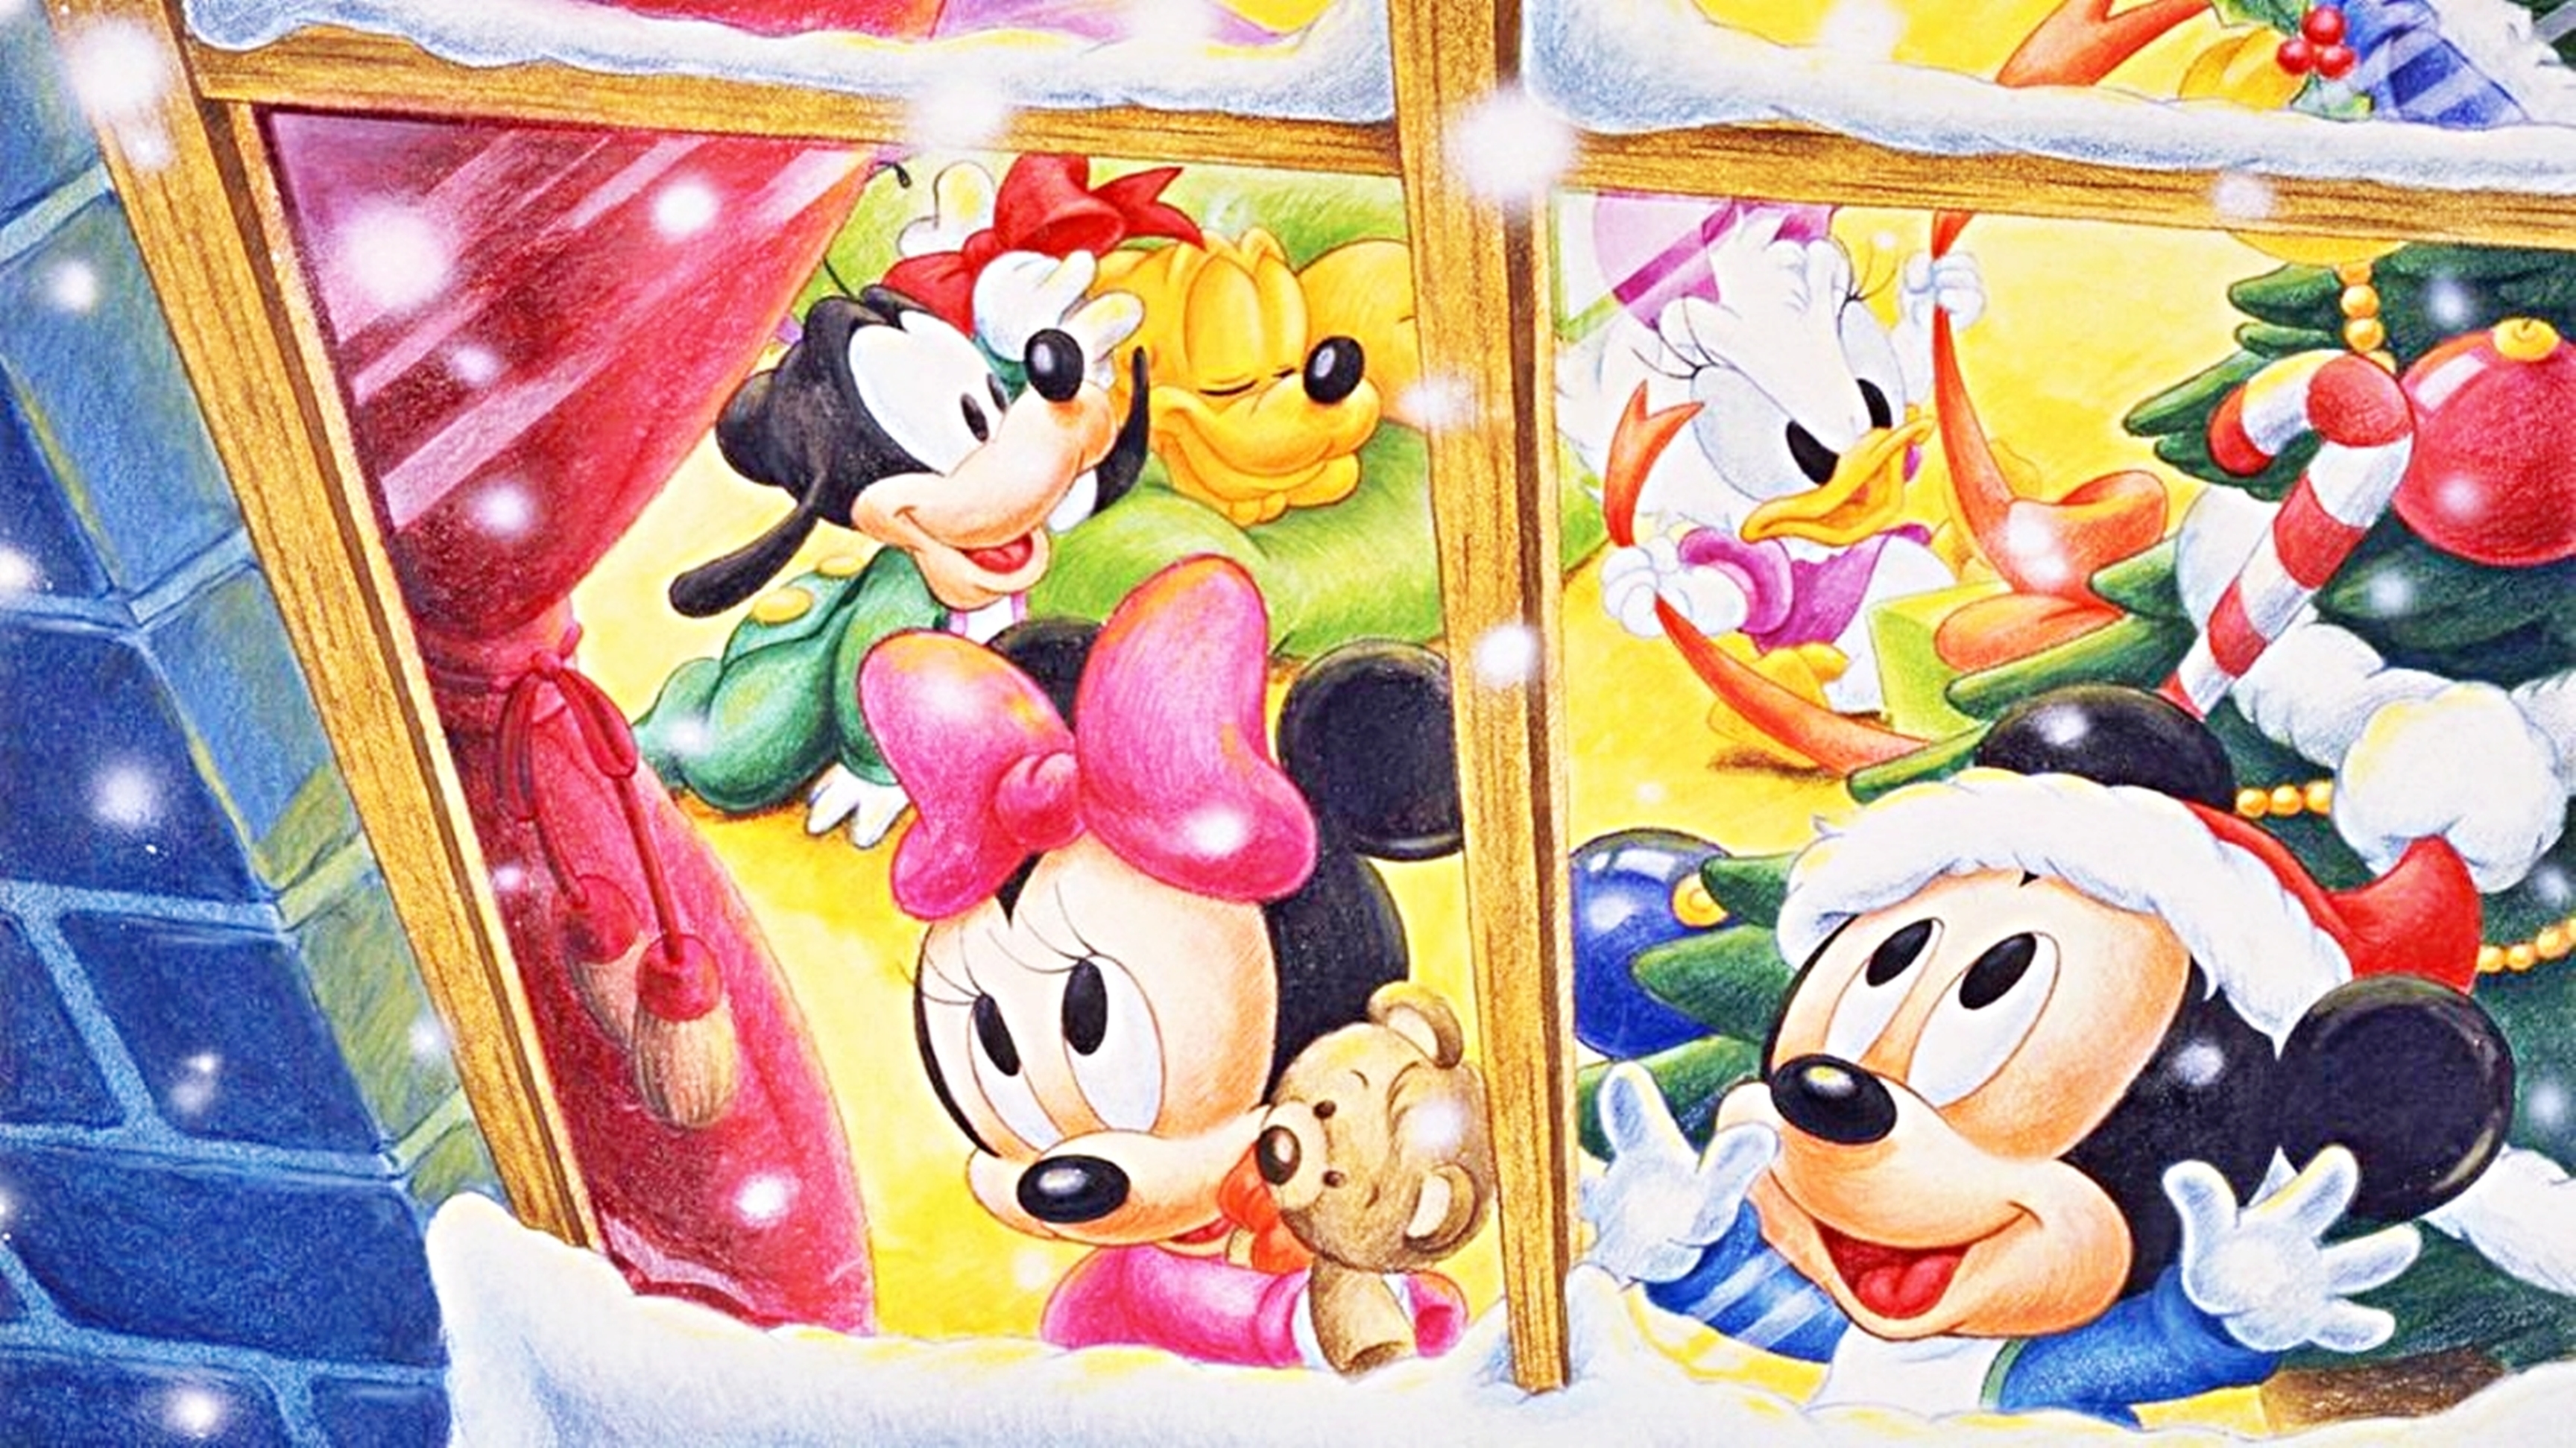 Immagini Natale Walt Disney.Walt Disney Wallpaper A Very Disney Natale Personaggi Disney Foto 32920193 Fanpop